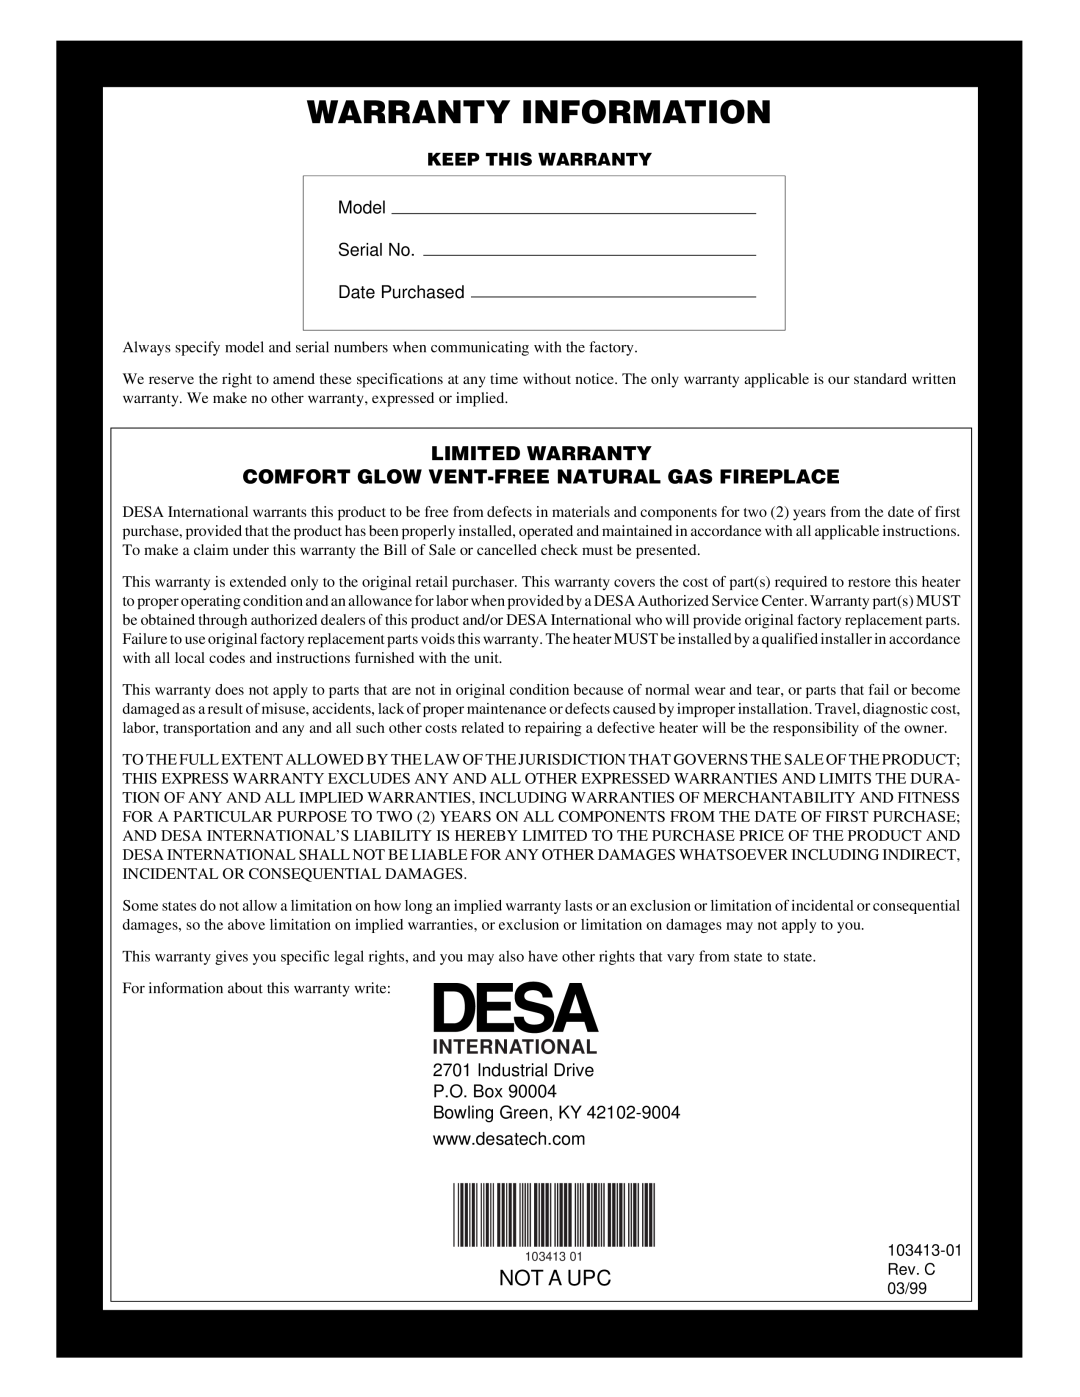 Desa CGFP28N Warranty Information, Limited Warranty, Comfort Glow Vent-Freenatural Gas Fireplace, International, Not A Upc 